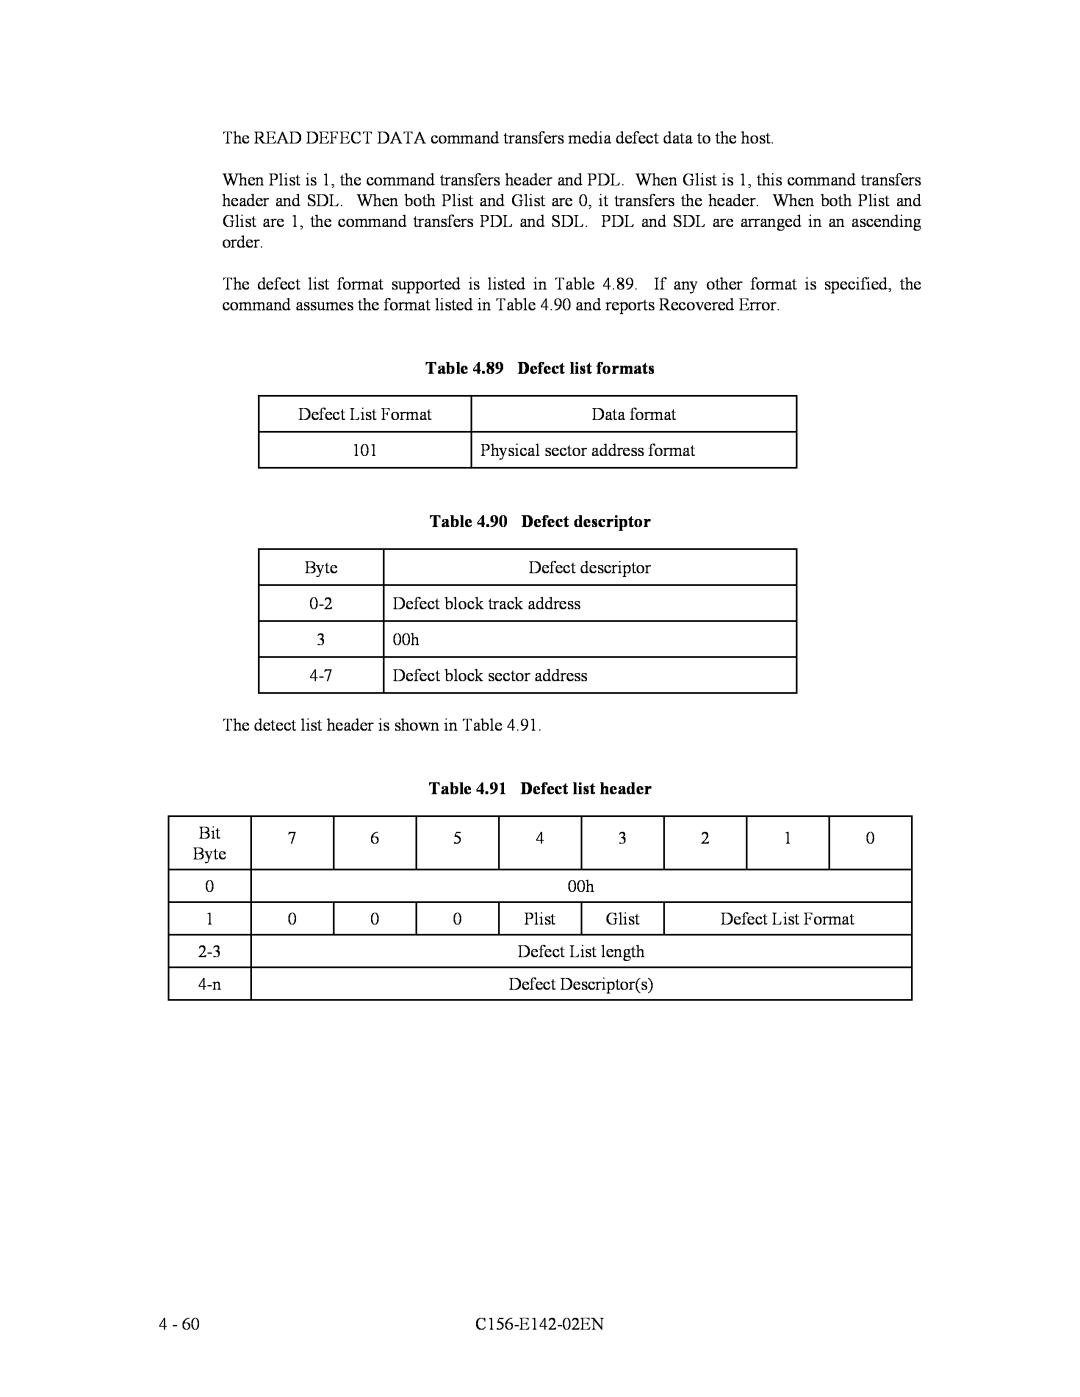 Fujitsu MCE3130AP manual 89 Defect list formats, Defect descriptor, 91 Defect list header, Physical sector address format 